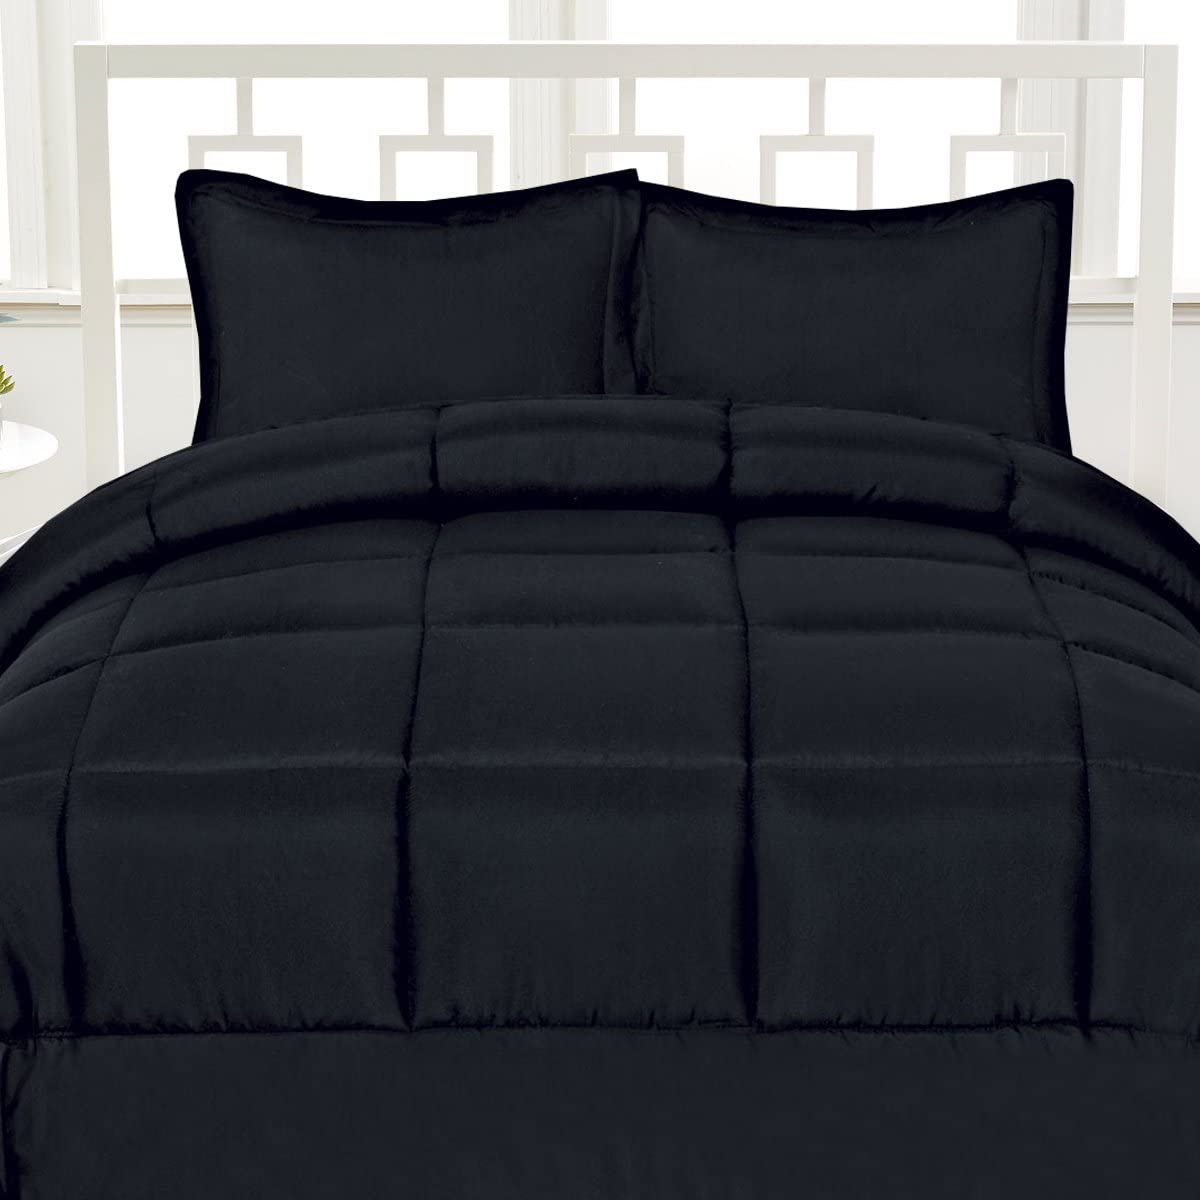 Fancy Linen Down Alternative Comforter Set Solid Black All Sizes New 